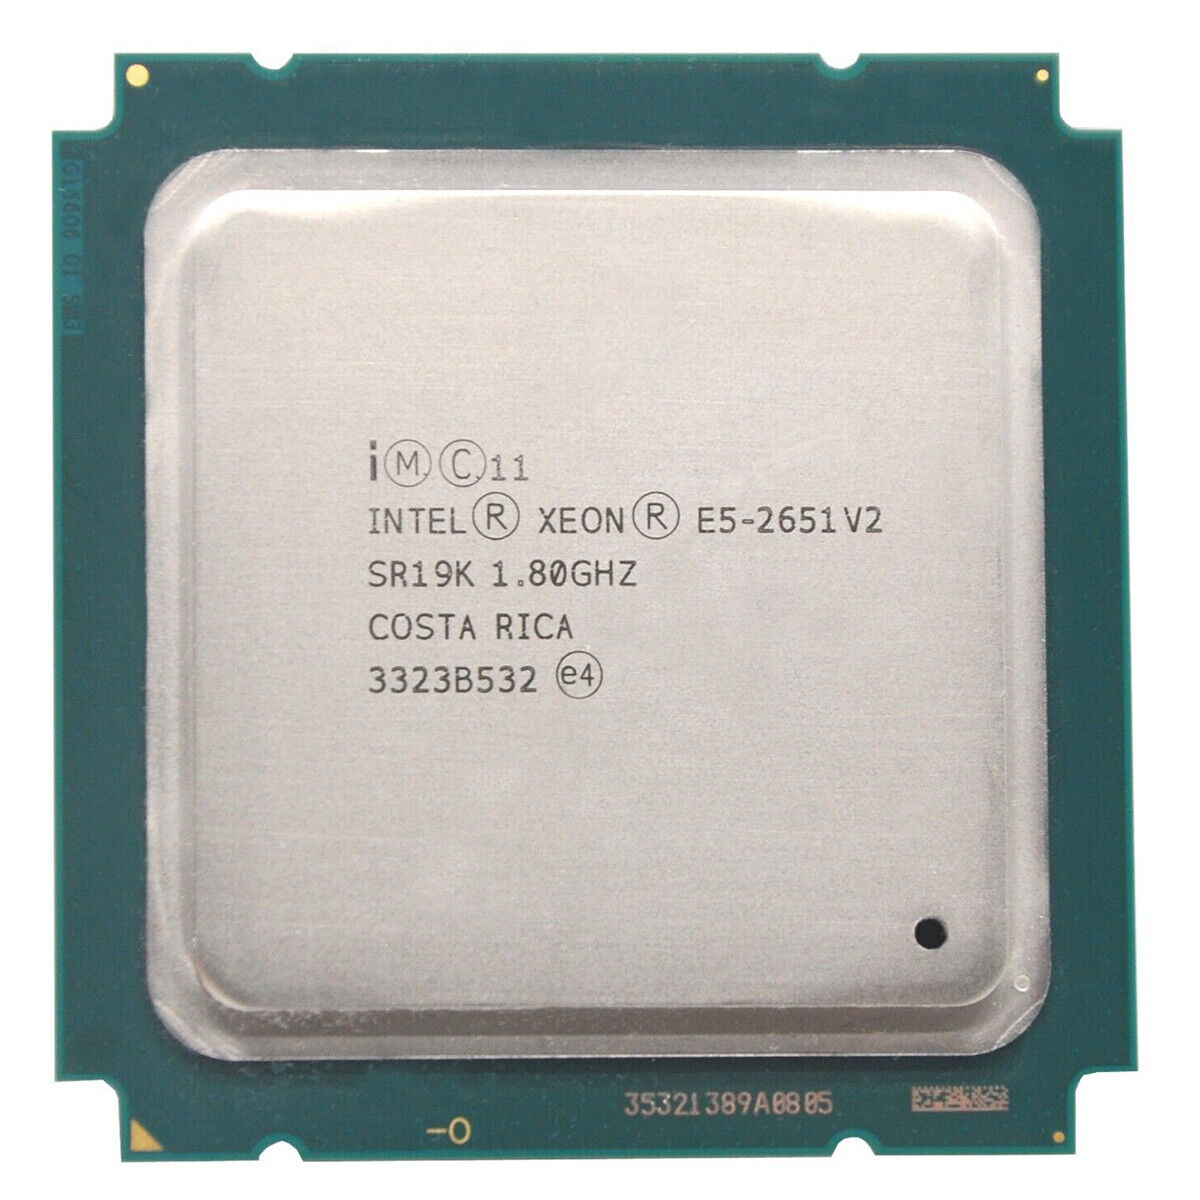 Intel Xeon E5-2697 V2 E5-2696 V2 E5-2695 V2 E5-2651 V2 LGA 2011 Processor CPU